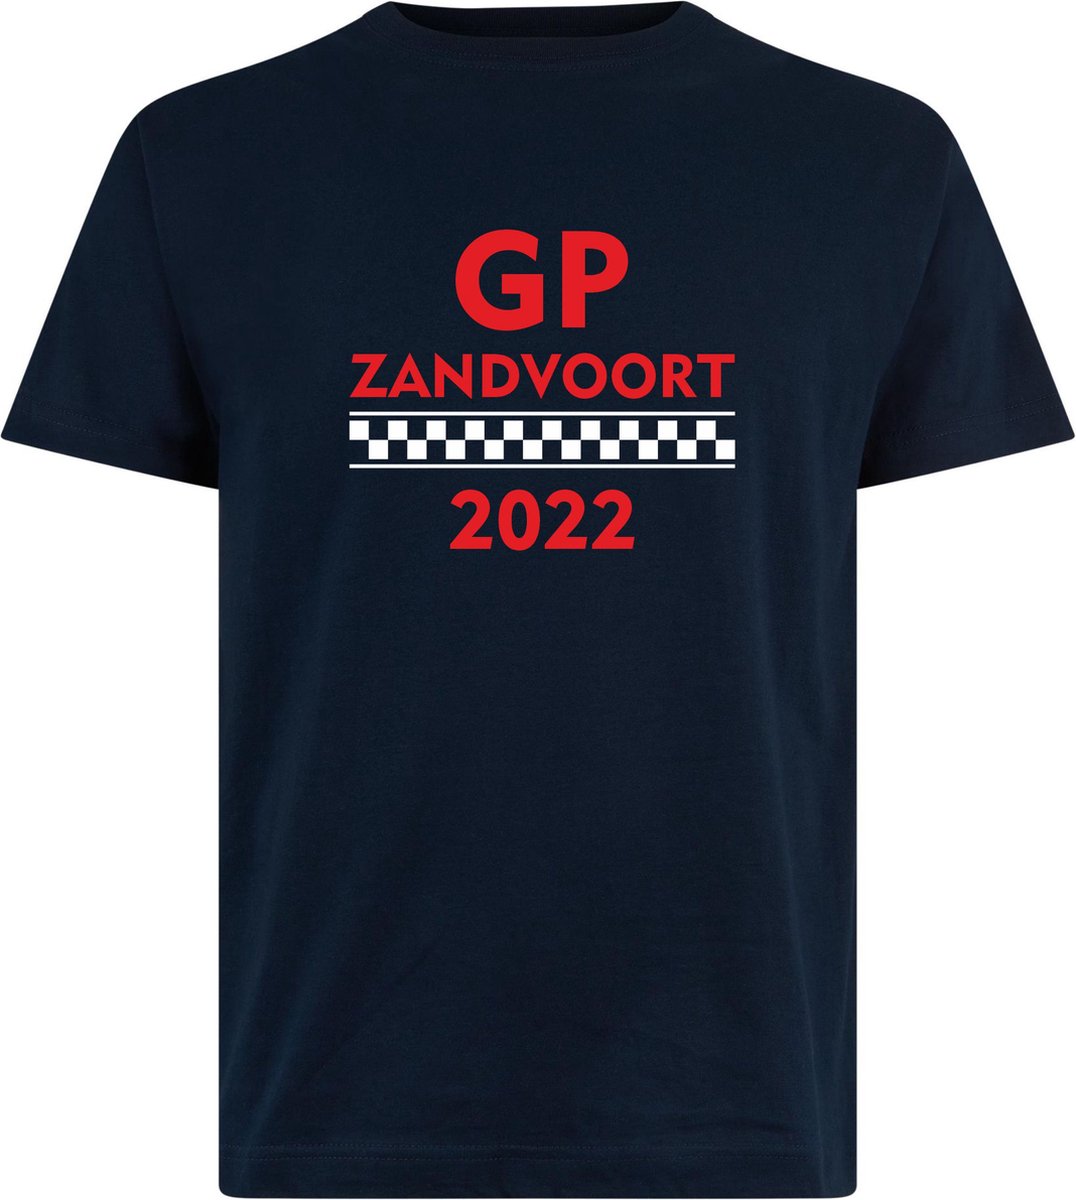 T-shirt GP Zandvoort2022 | Max Verstappen / Red Bull Racing / Formule 1 fan | Grand Prix Circuit Zandvoort | kleding shirt | Navy | maat XXL